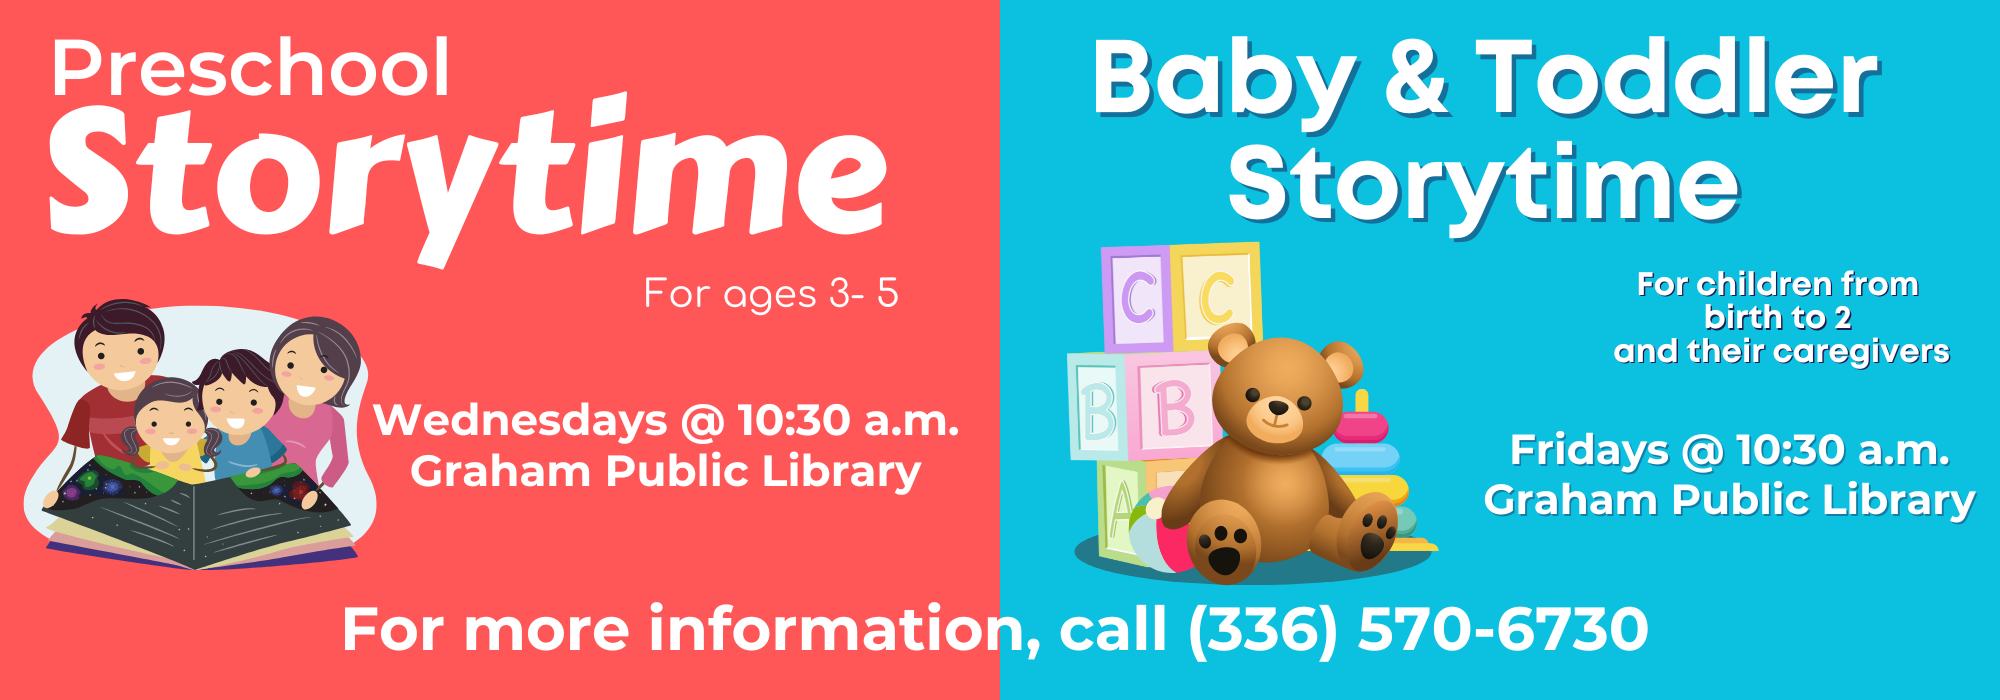 Preschool Storytime - Wednesdays at 1030 am & Baby-Toddler Storytime Fridays at 1030 am